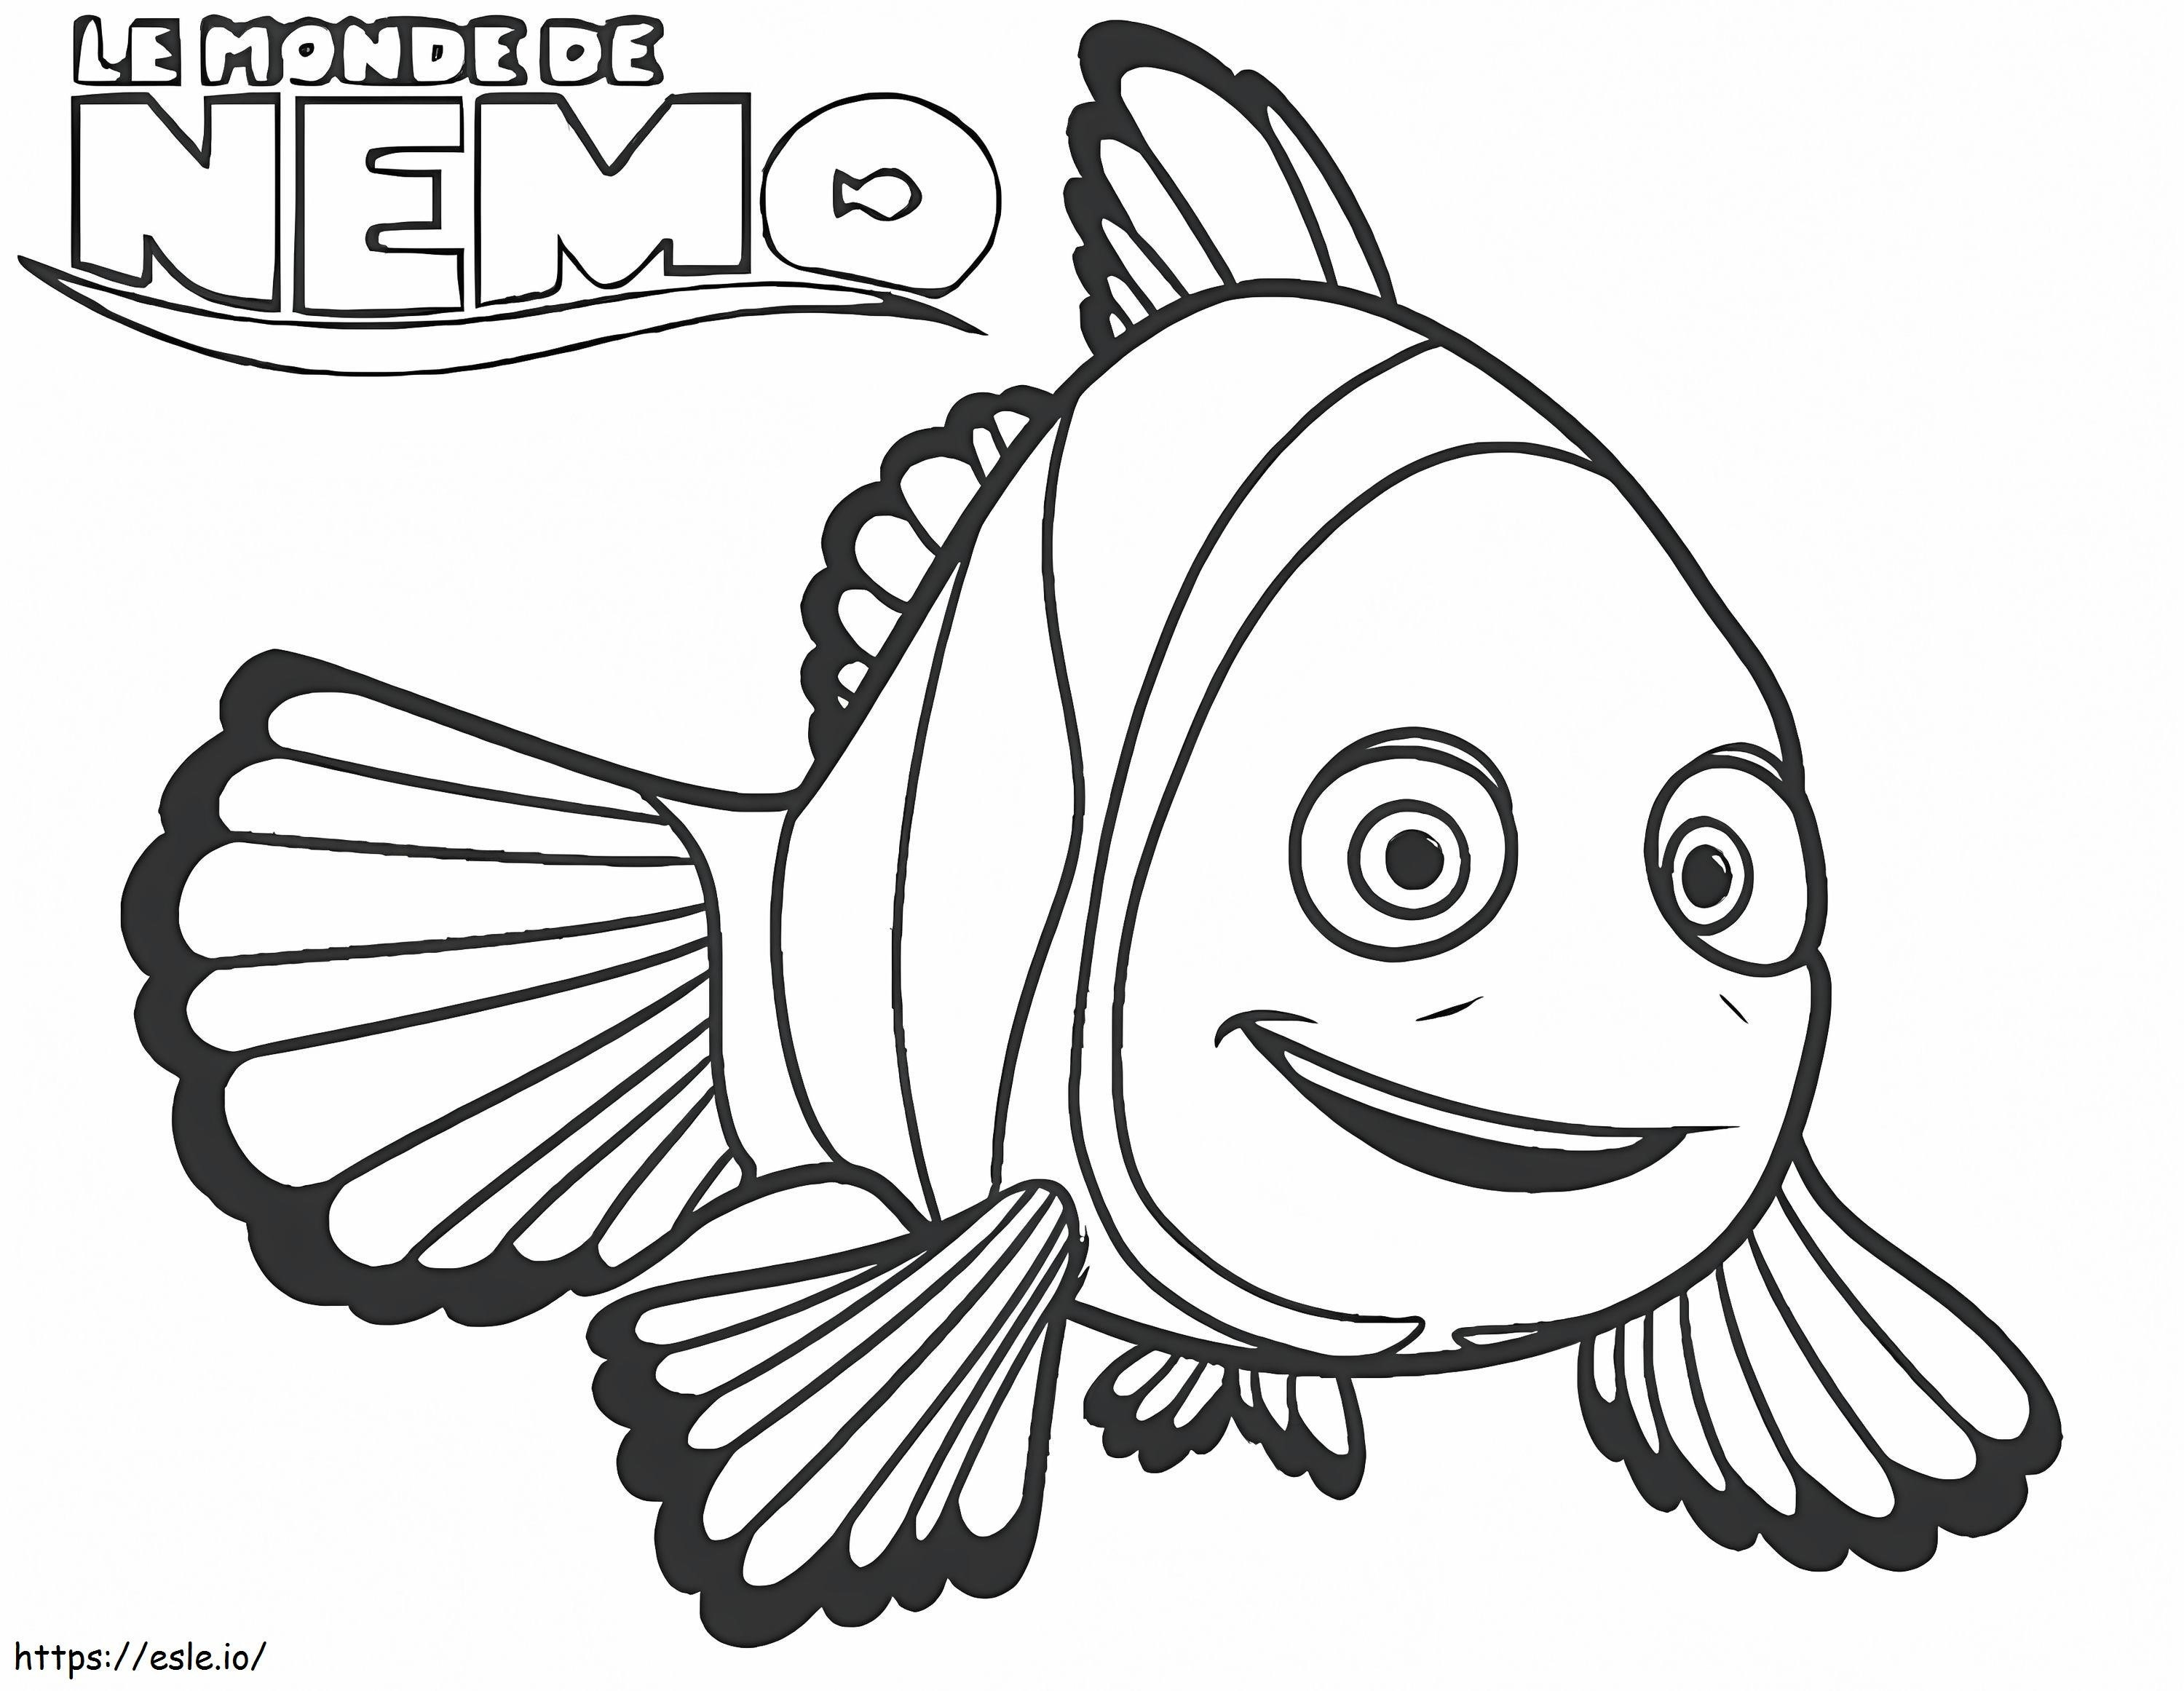 Beautiful Nemo coloring page